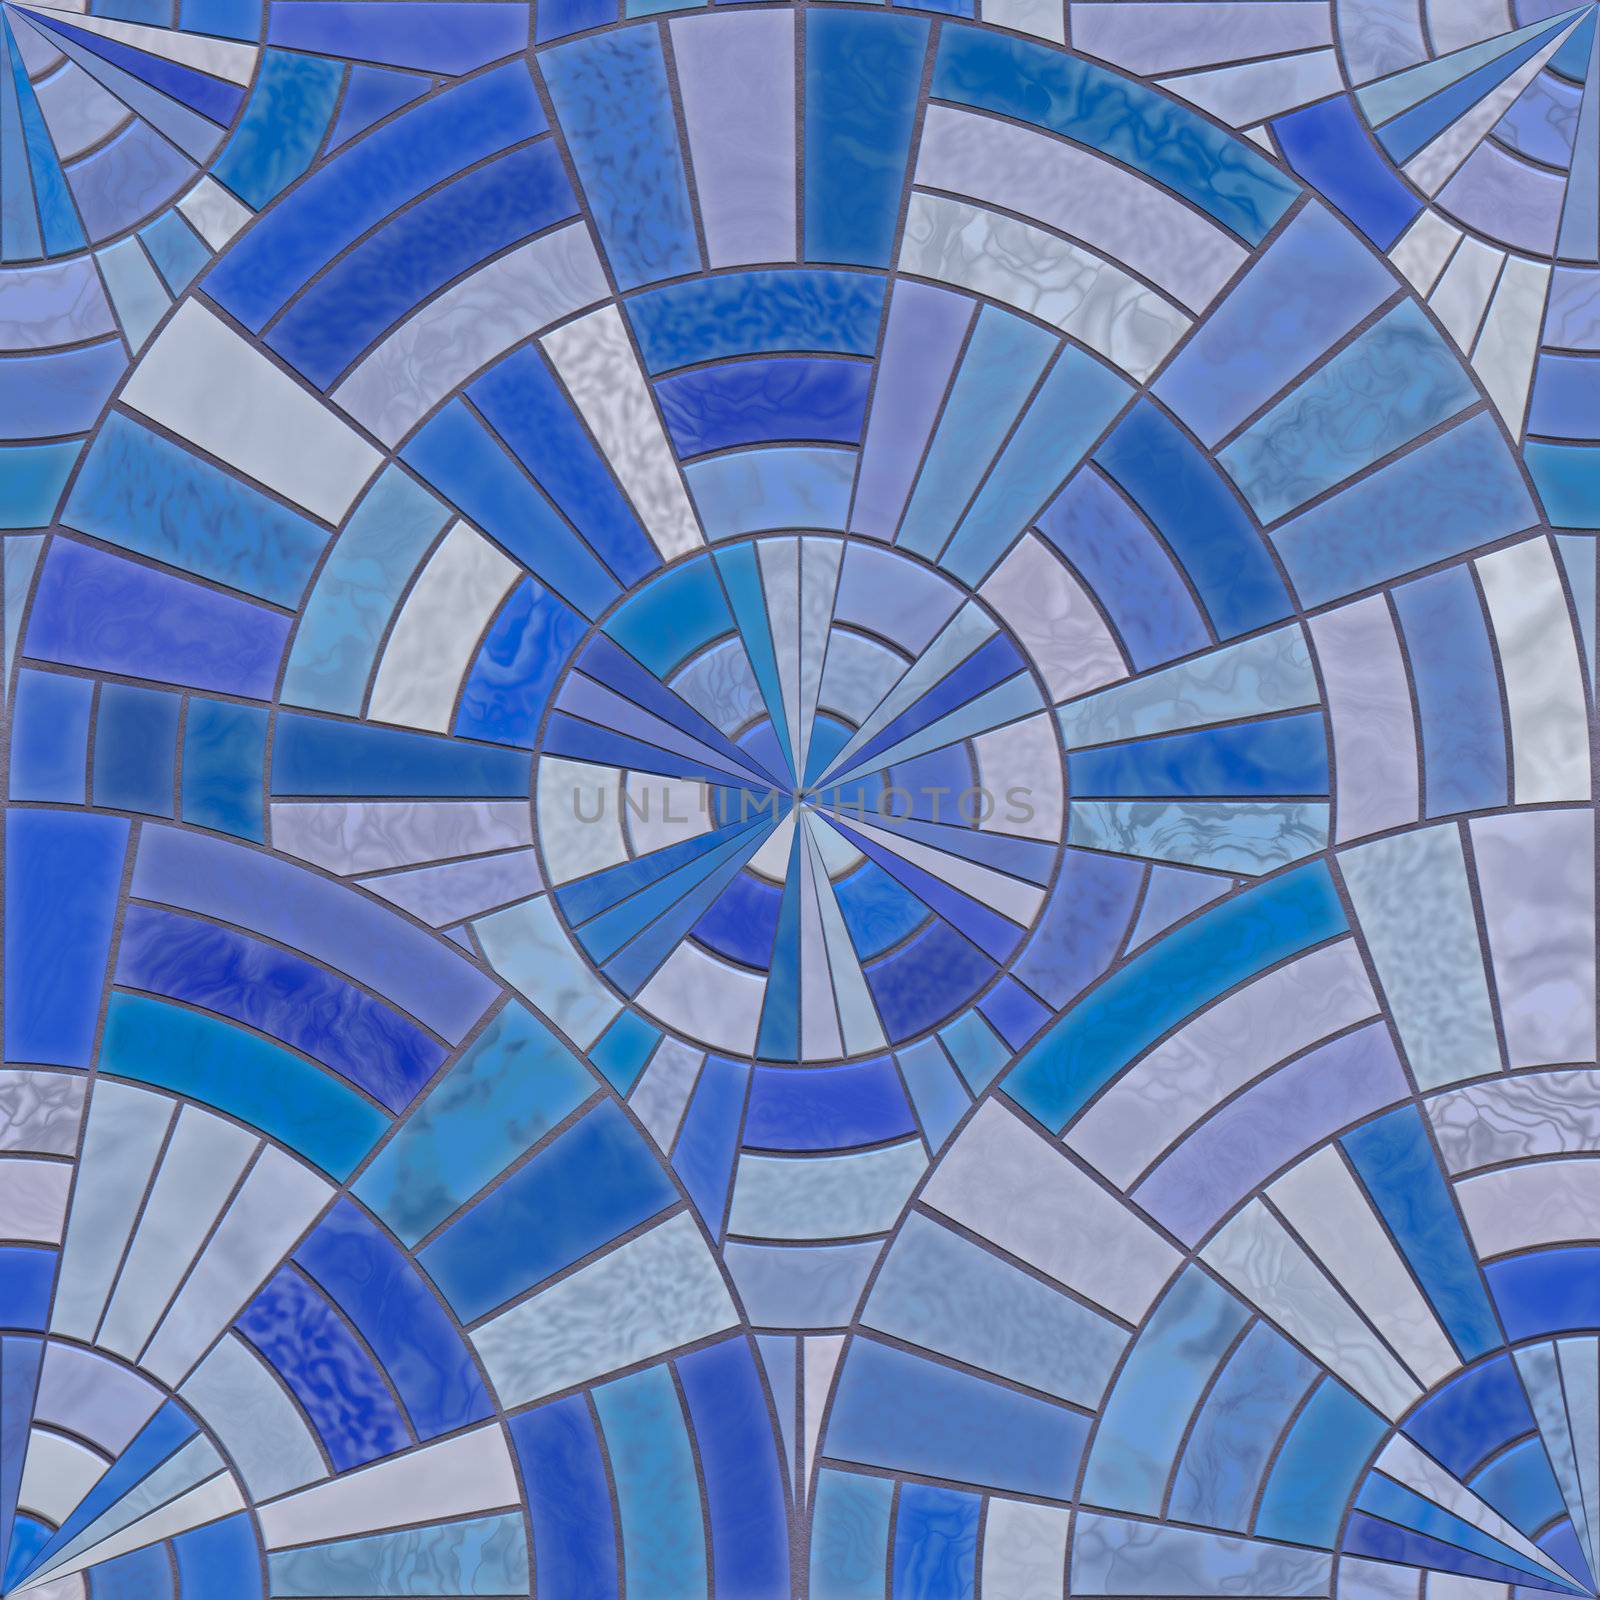 High quality seamless circular blue tiles backgroung